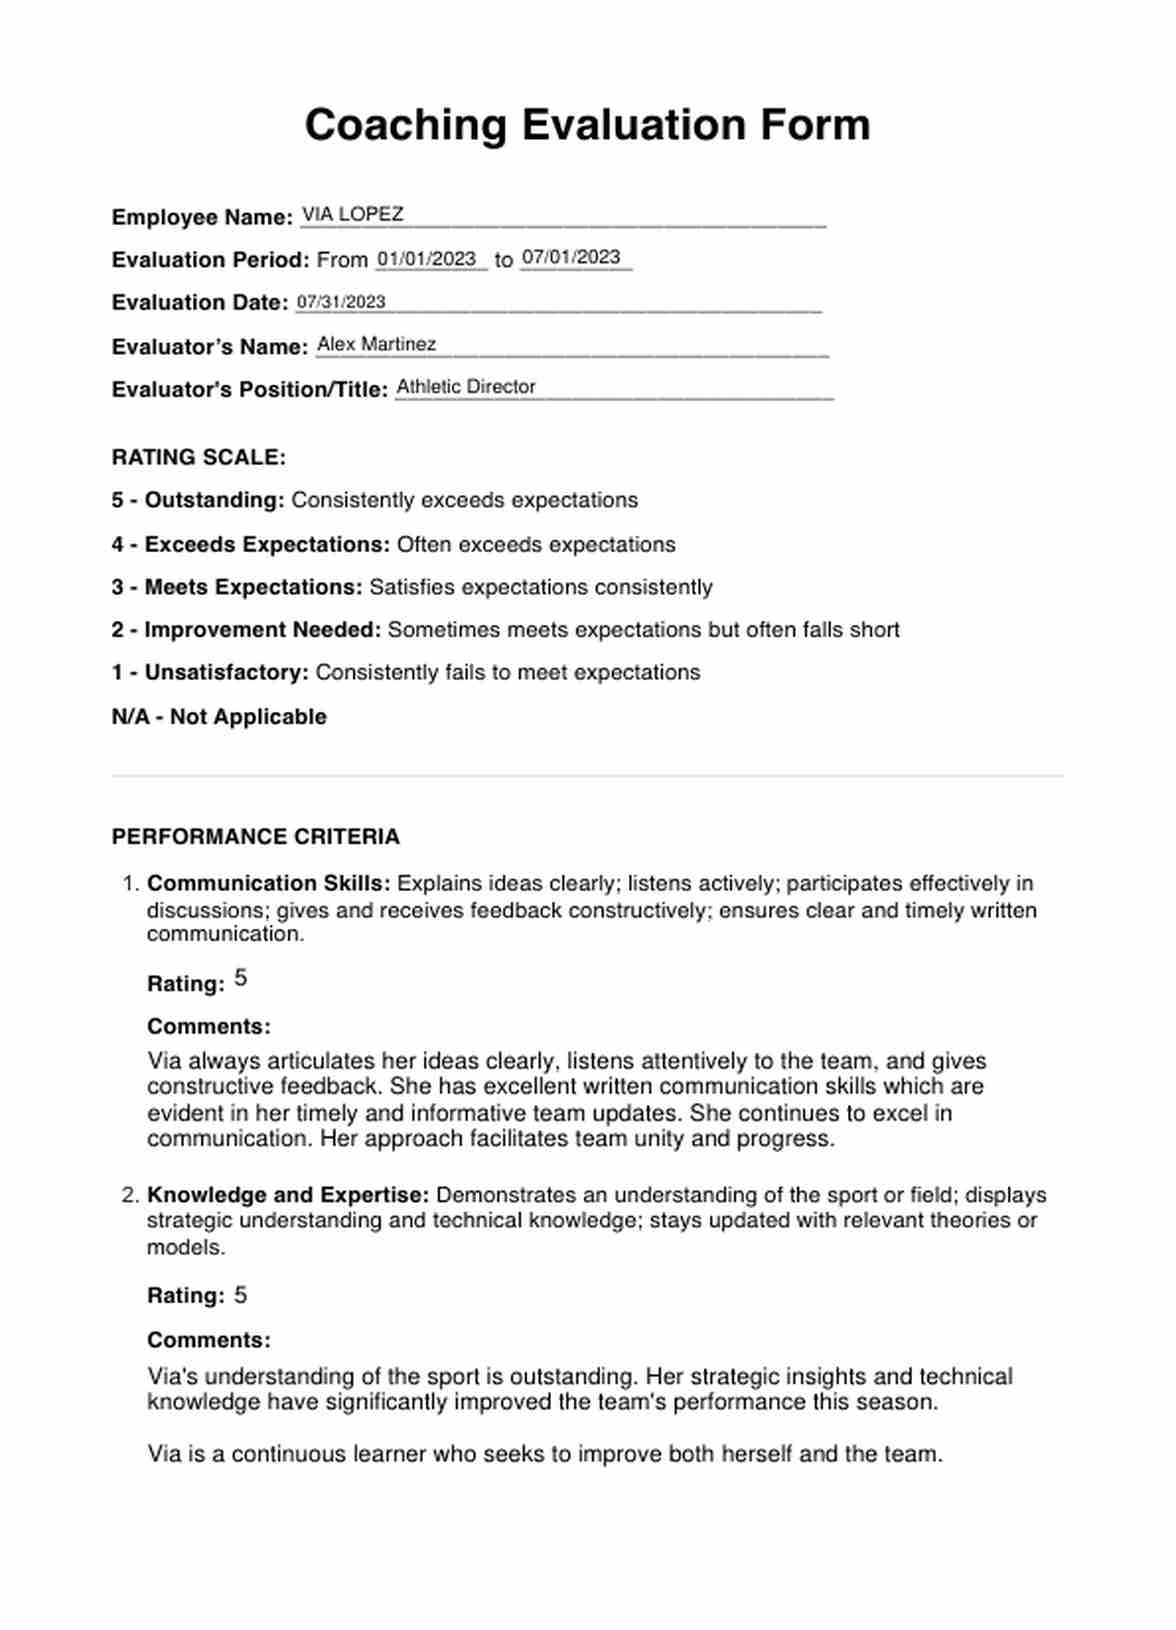 Coaching Evaluation Form PDF Example